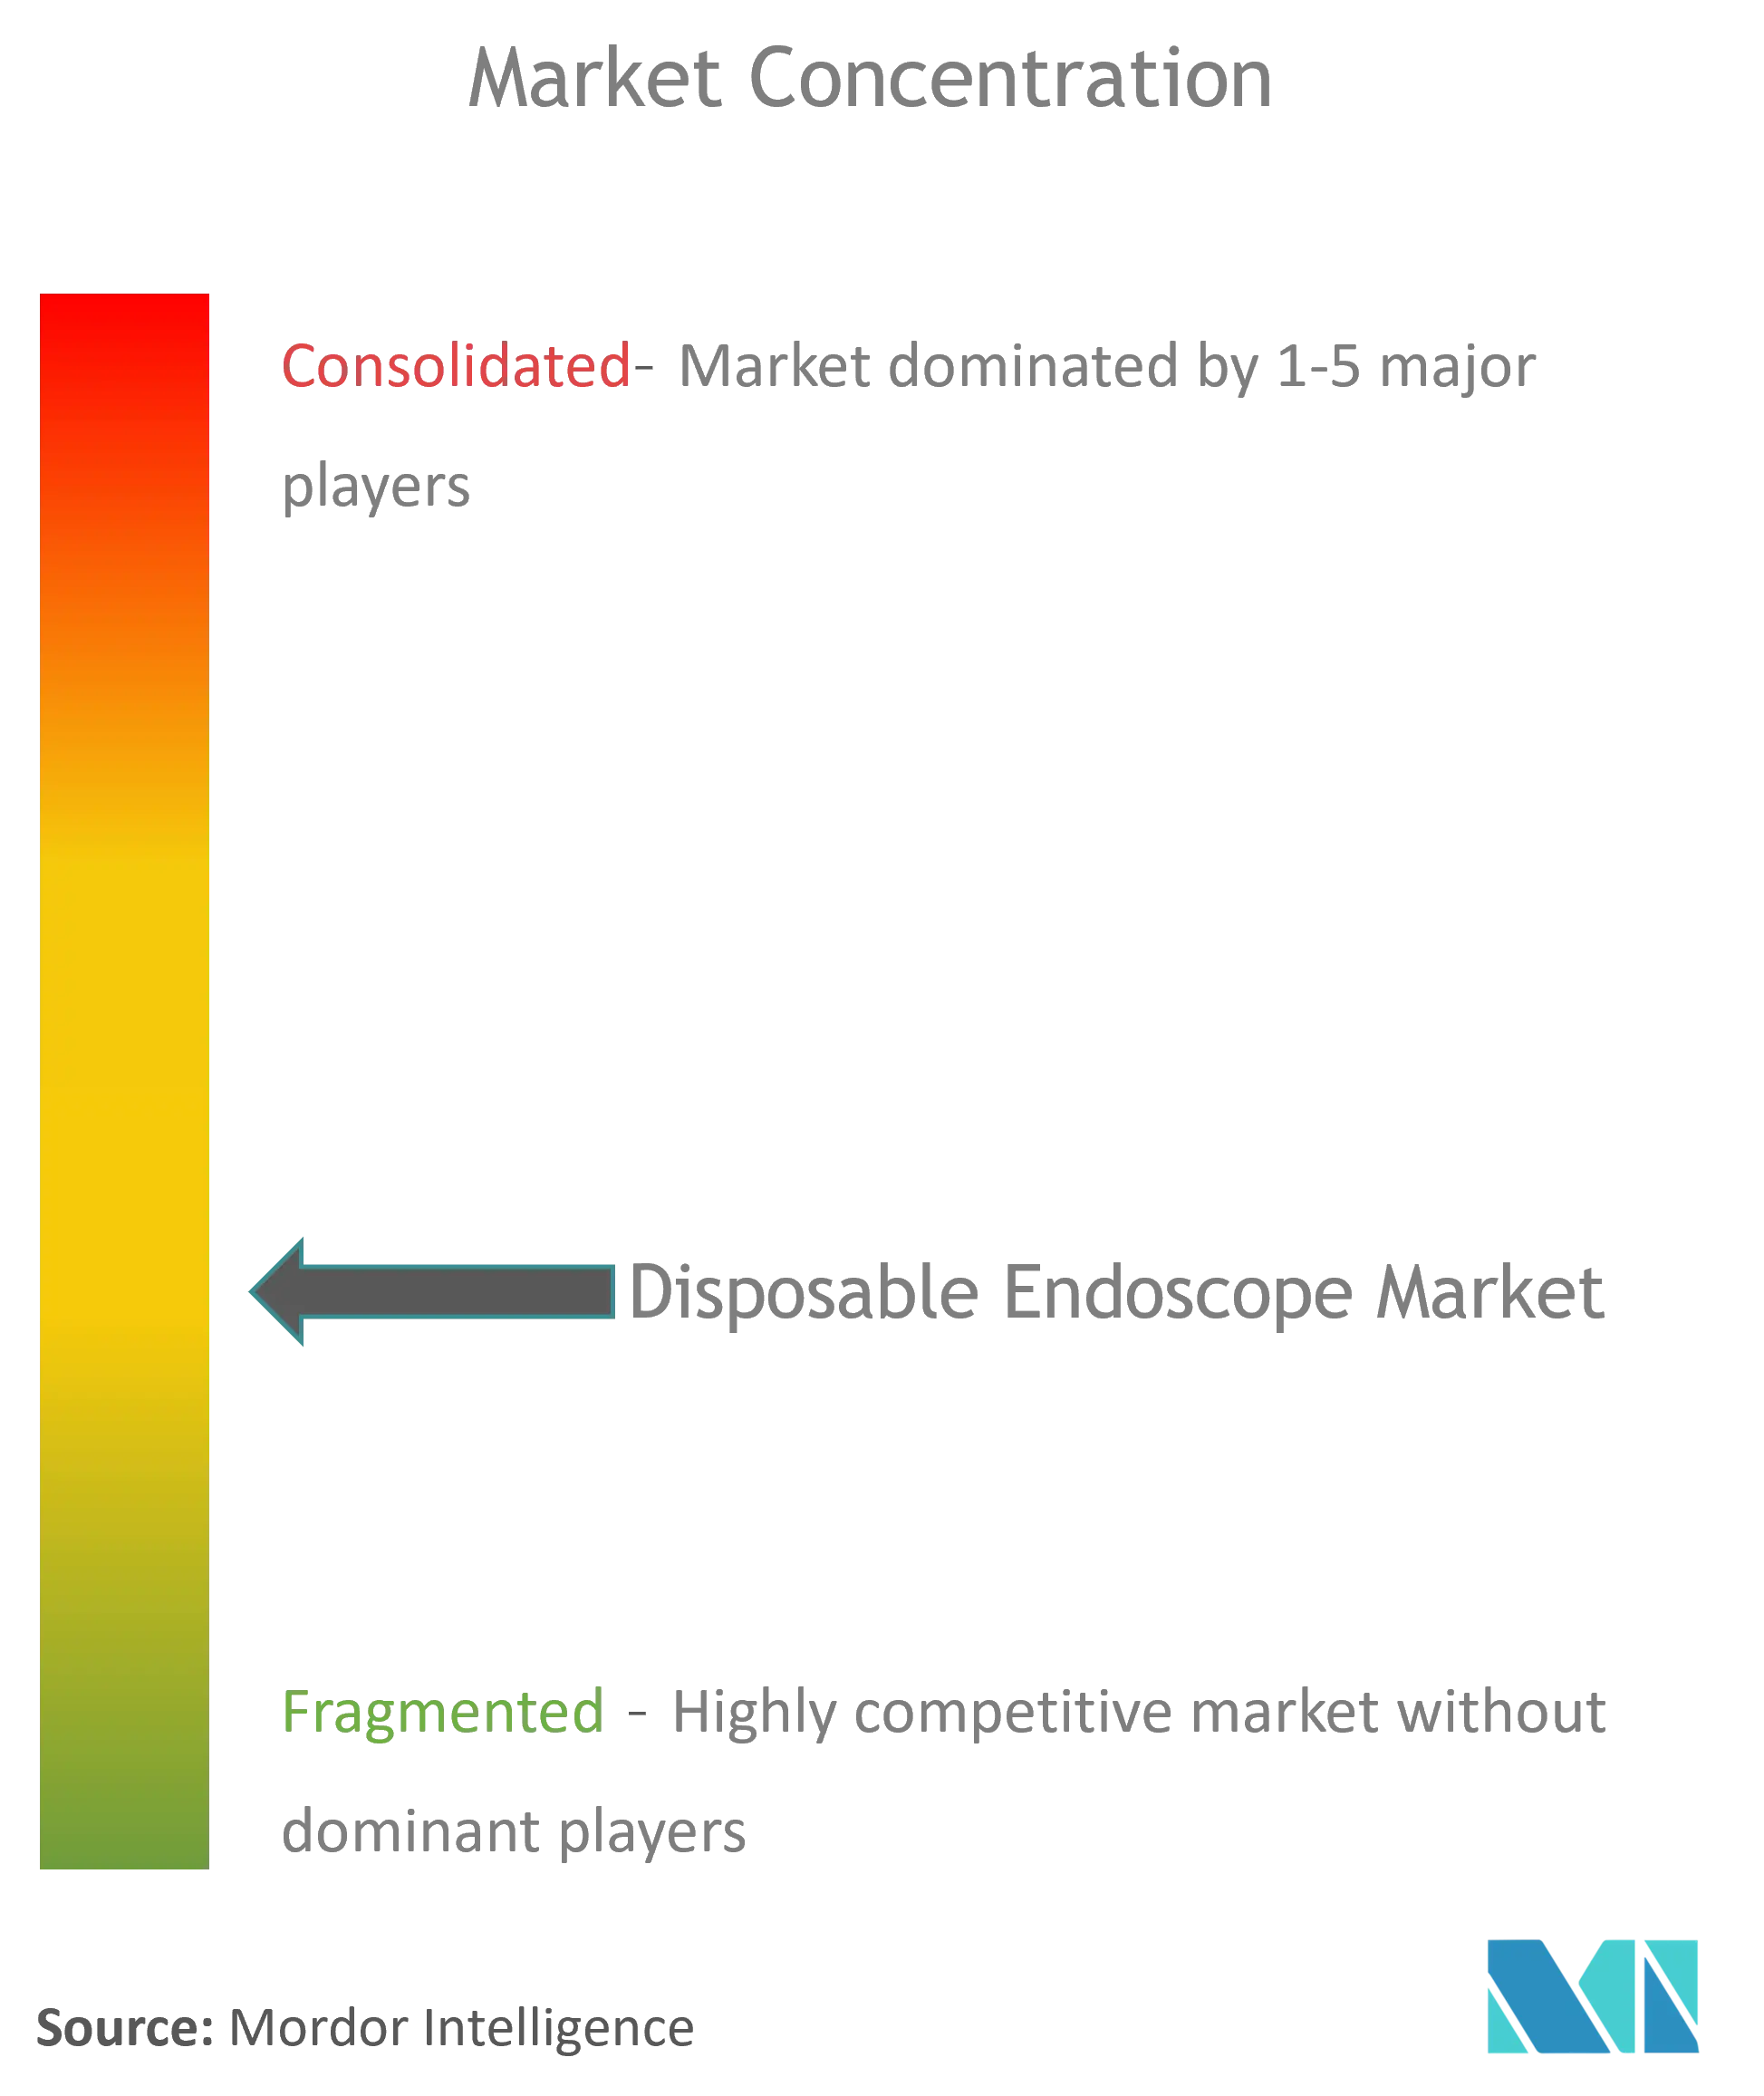 Global Disposable Endoscope Market Concentration